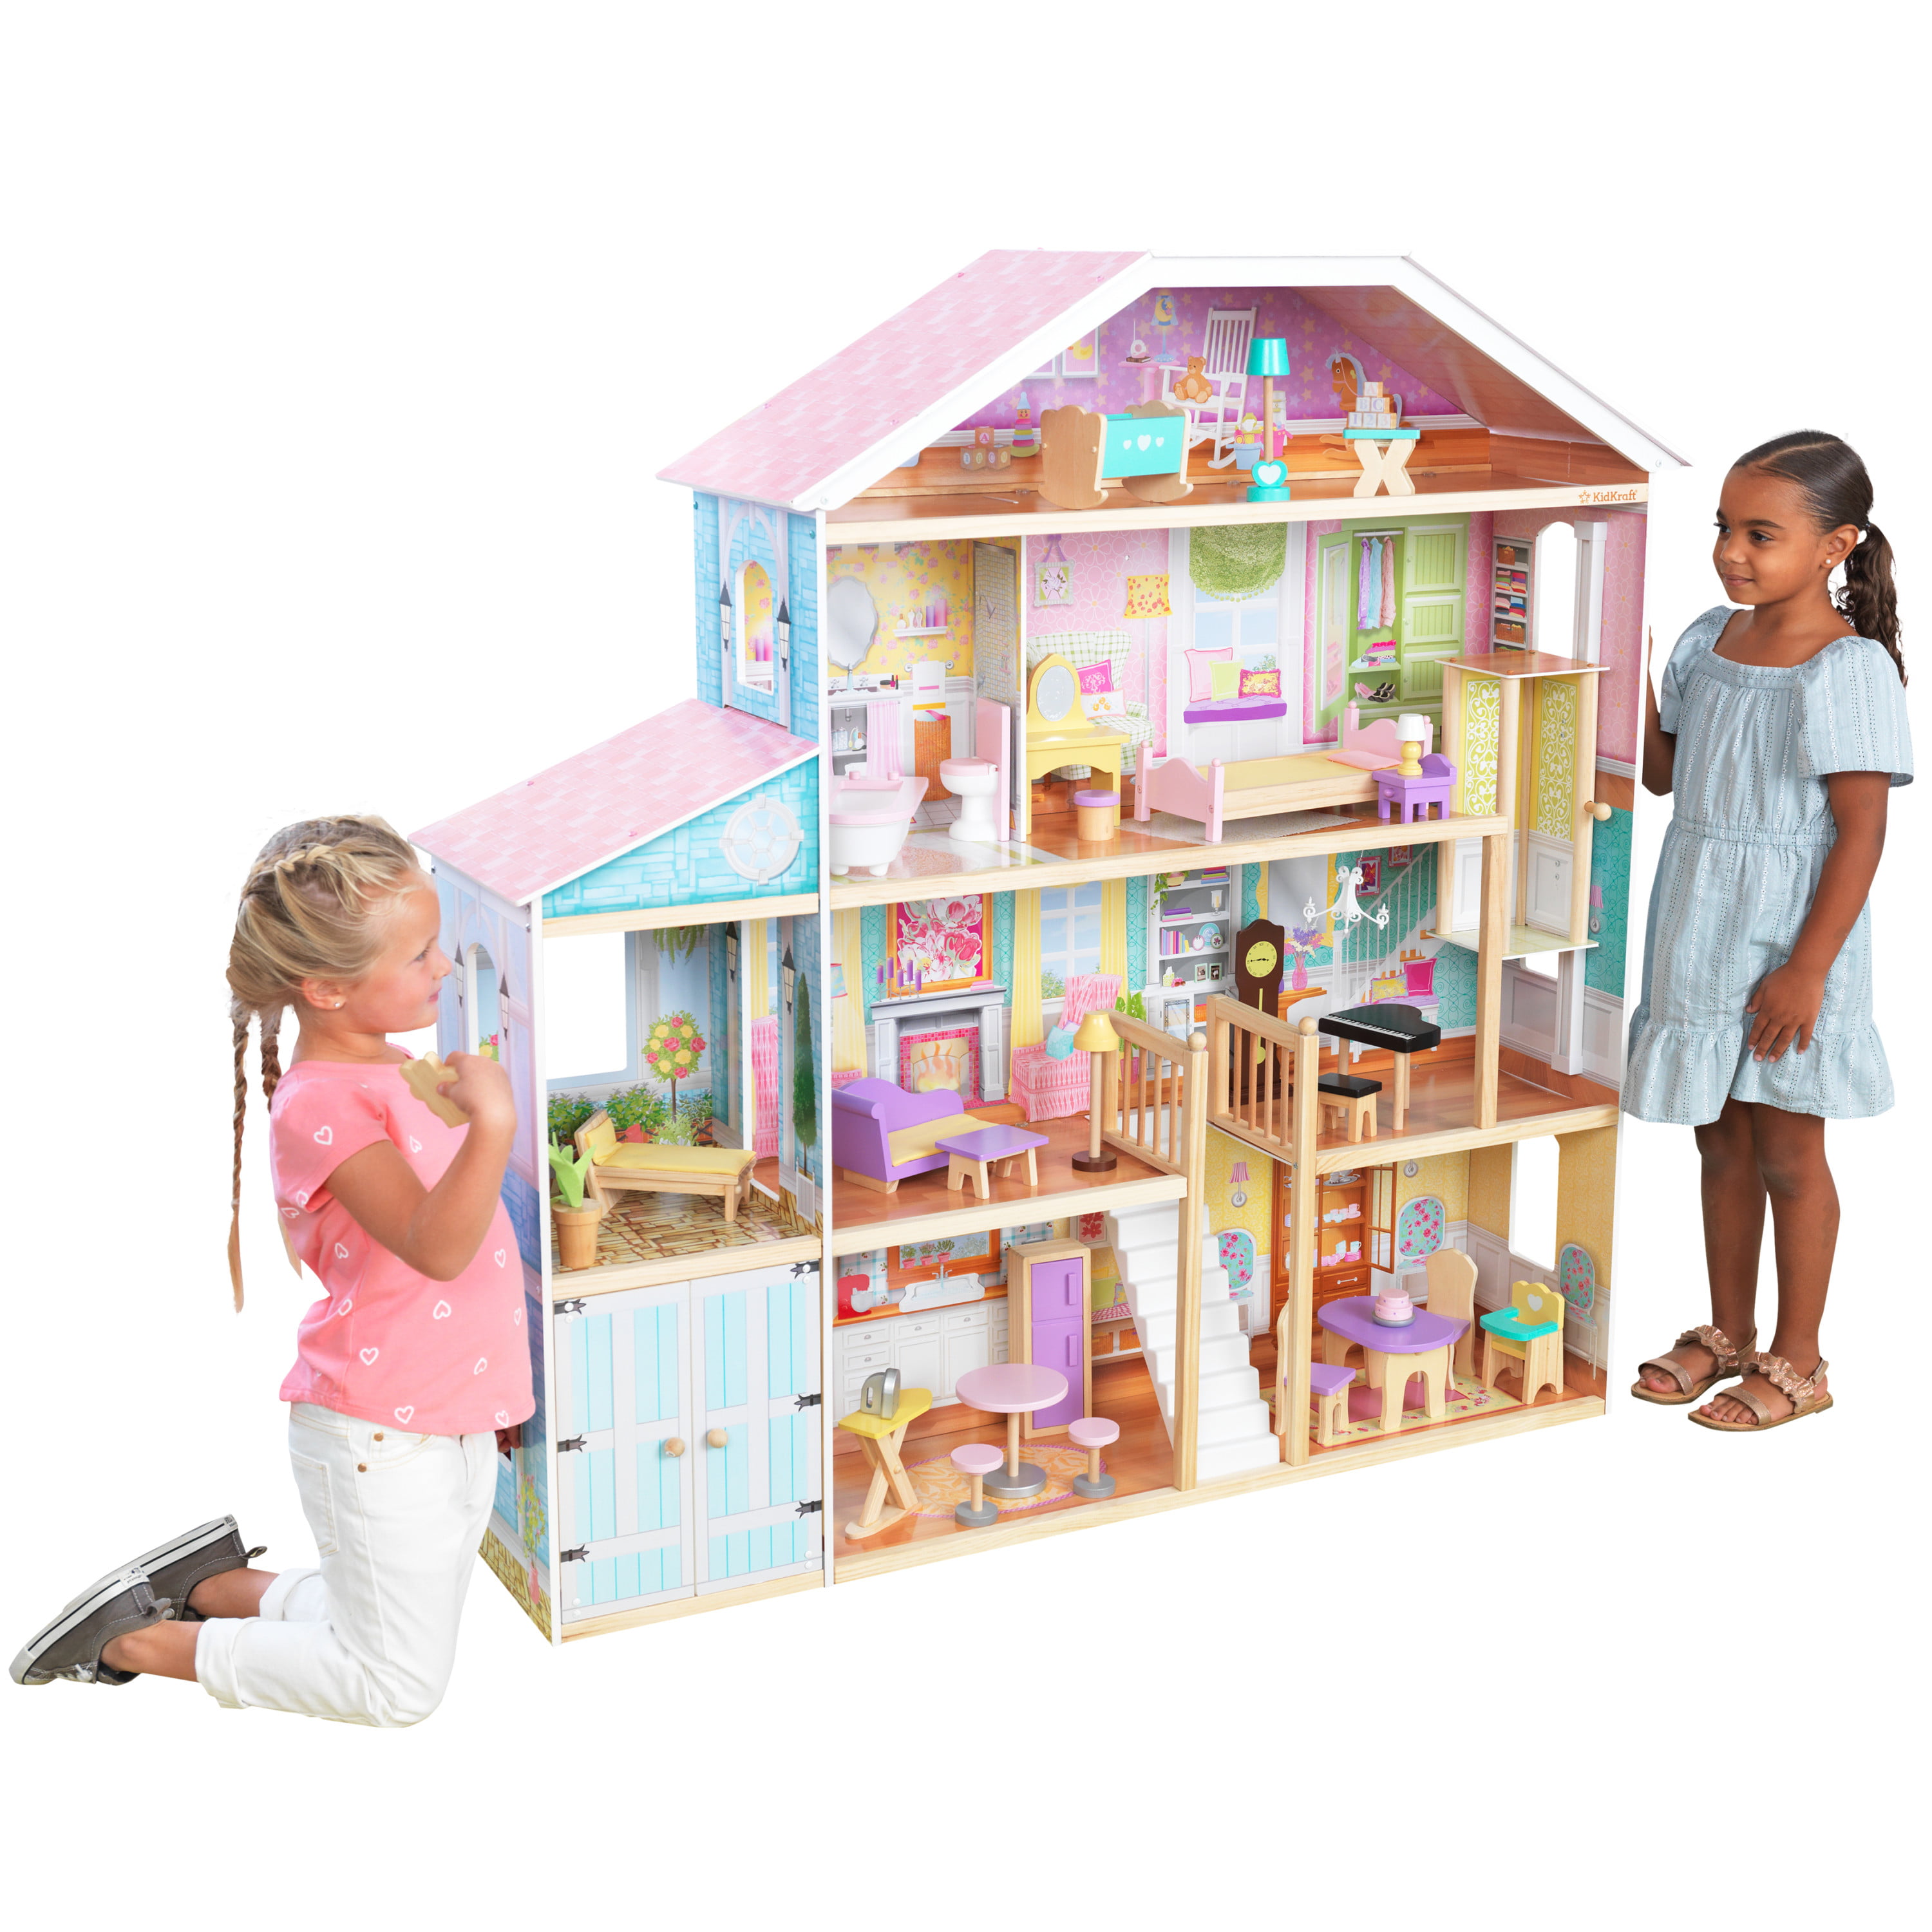 Kidkraft My Dream MansionWooden Dollhouse with Lift fits Barbie Sized Dolls 